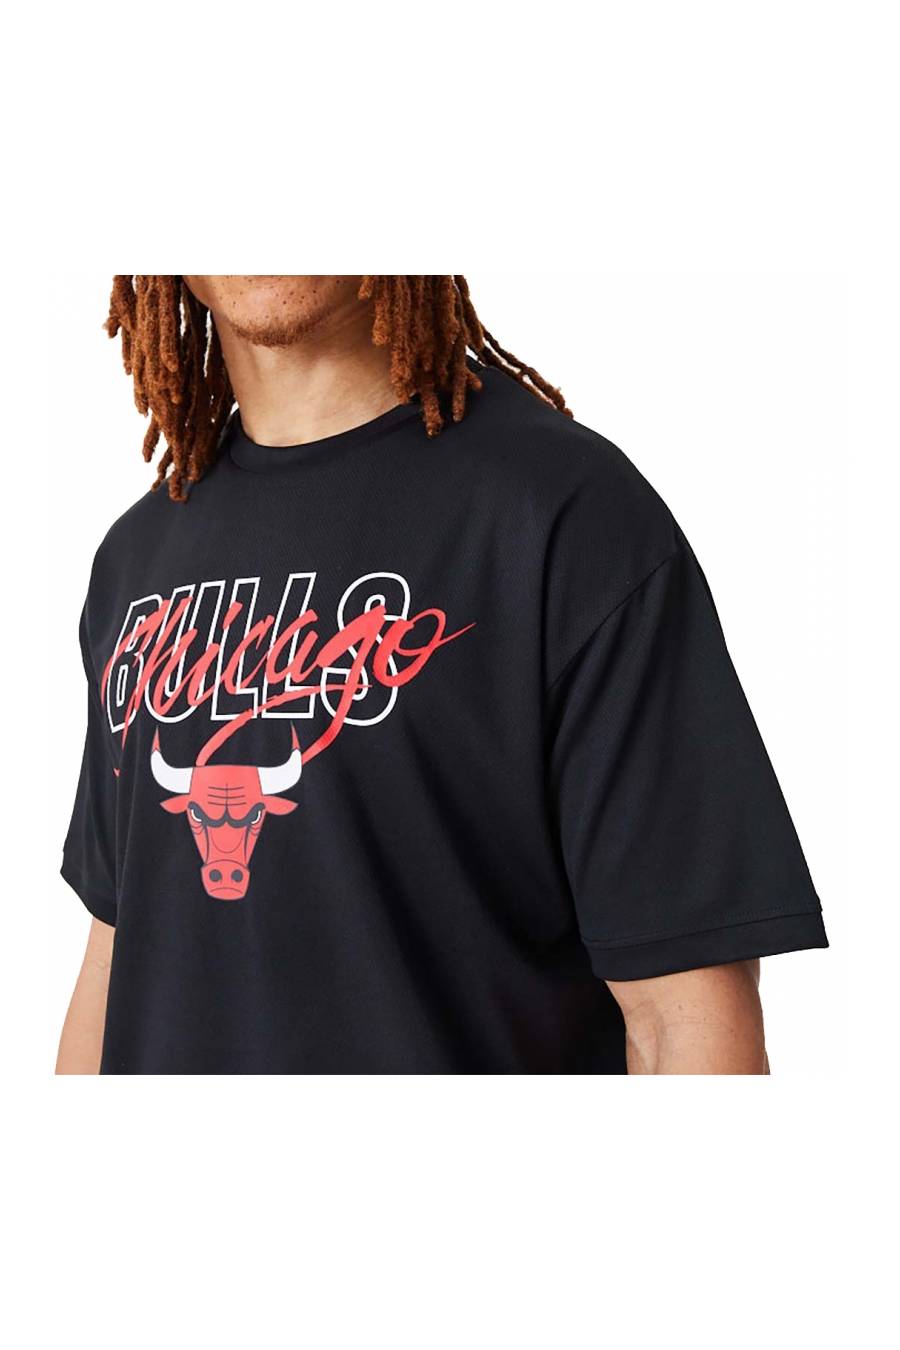 Camiseta New Era Script Os Mesh Bulls 60332209